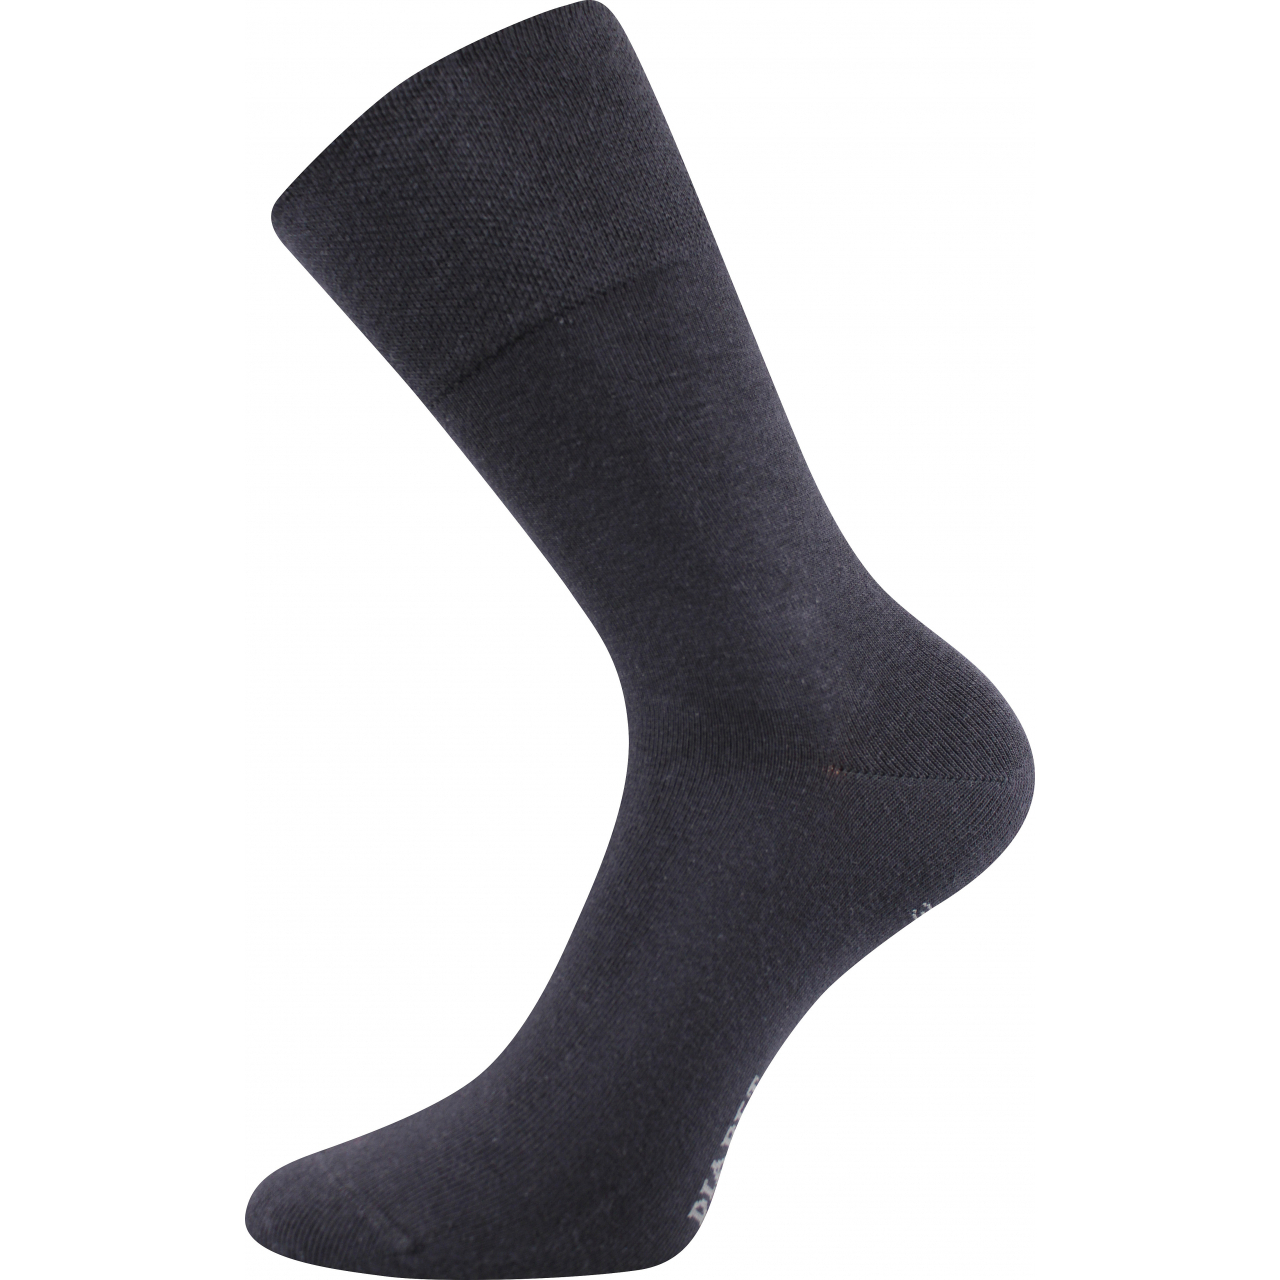 Ponožky klasické unisex Lonka Diagram - tmavě šedé, 47-50